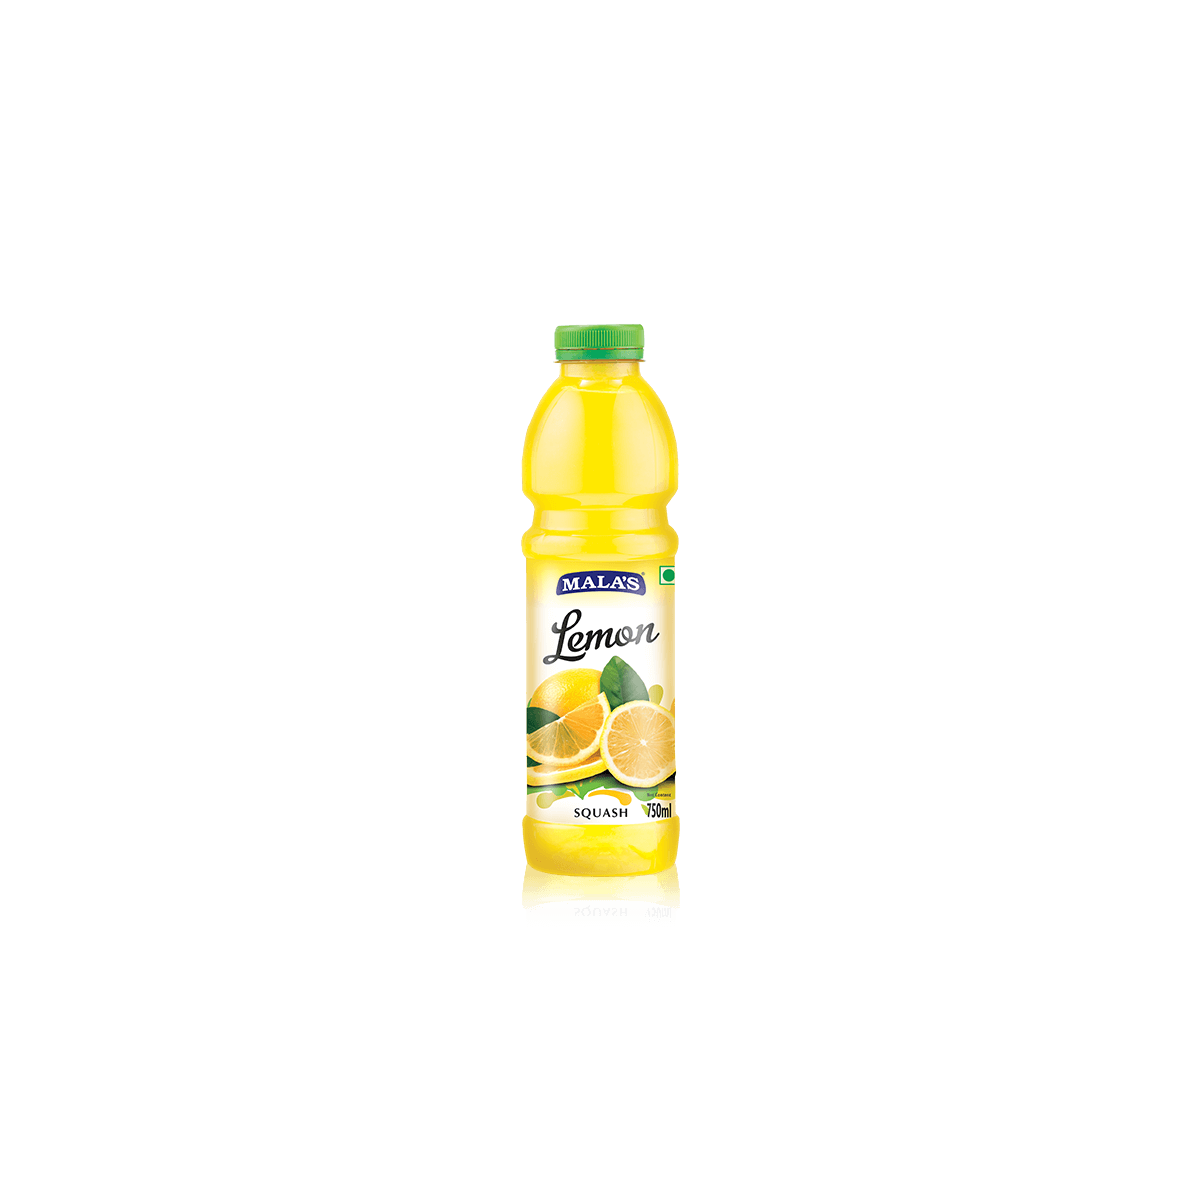 Mala's Lemon Squash Image